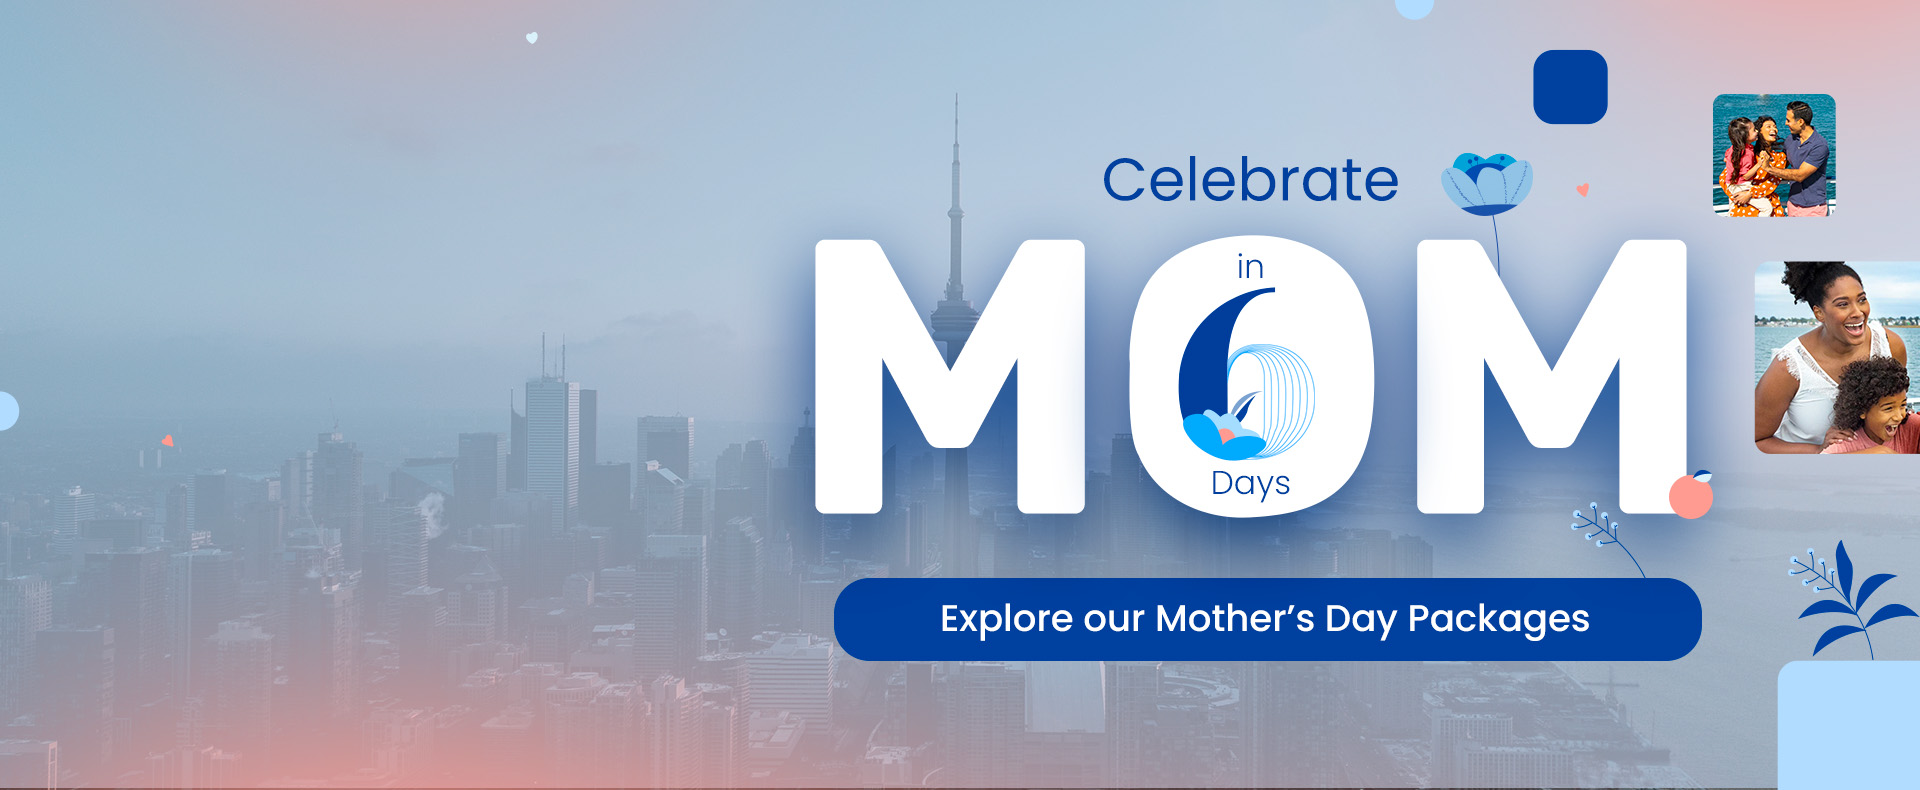 Toronto Mother's Day countdown 6 days away